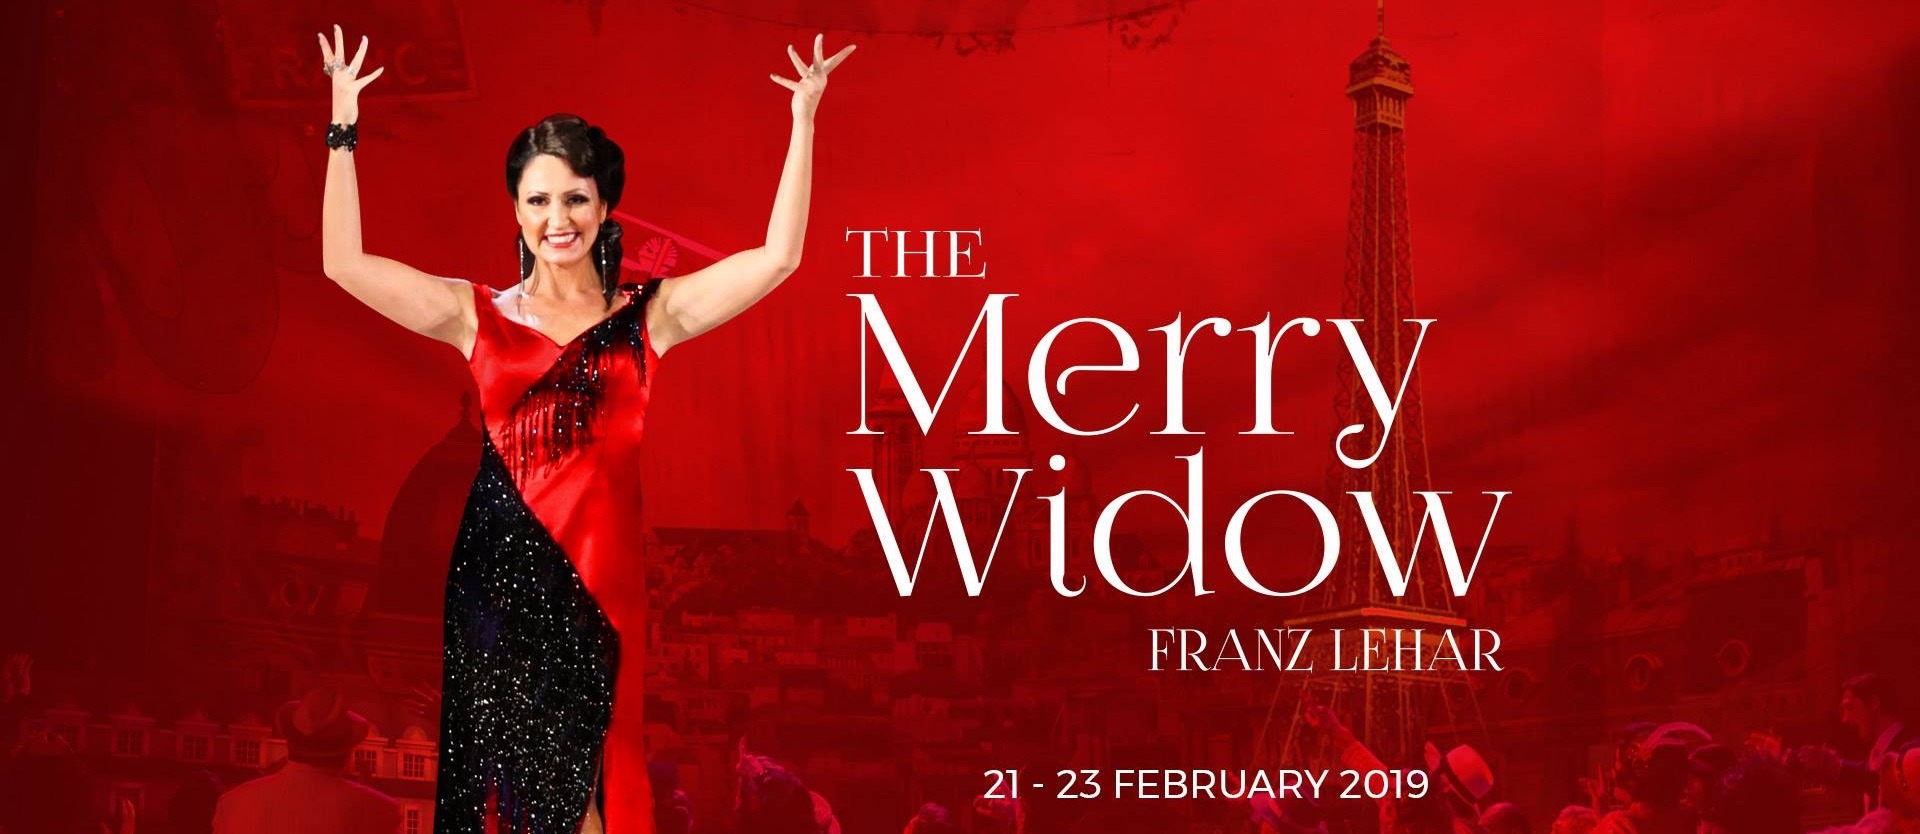 The Merry Widow operetta - Coming Soon in UAE